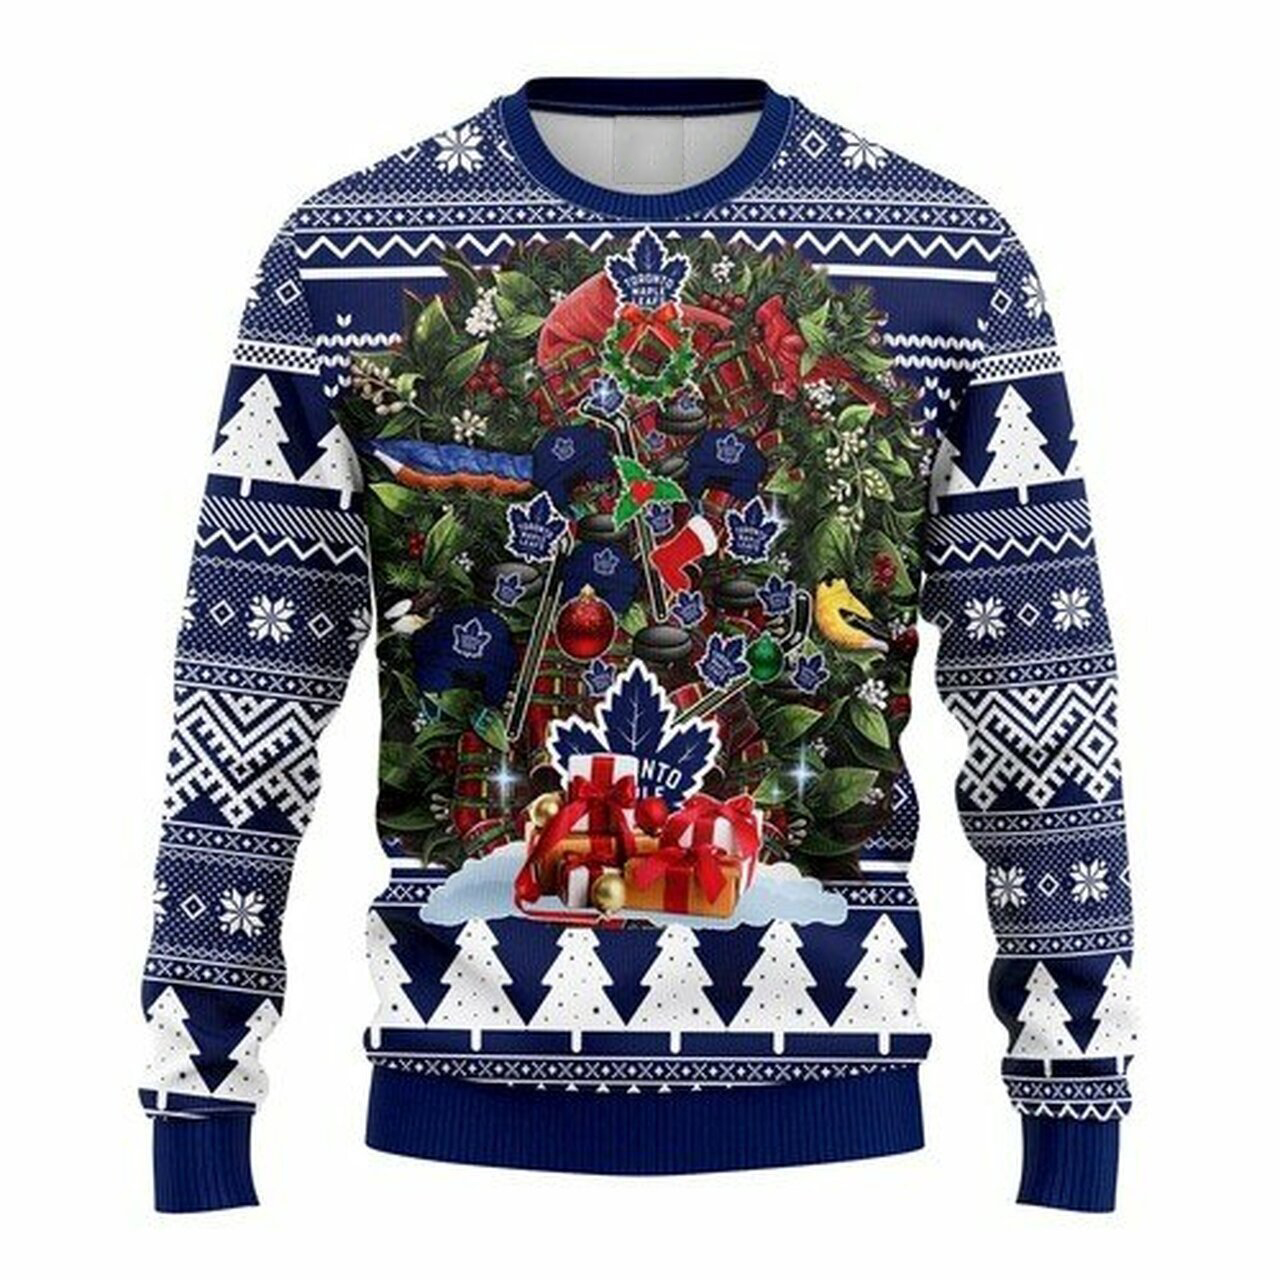 NHL Toronto Maple Leafs christmas tree ugly sweater